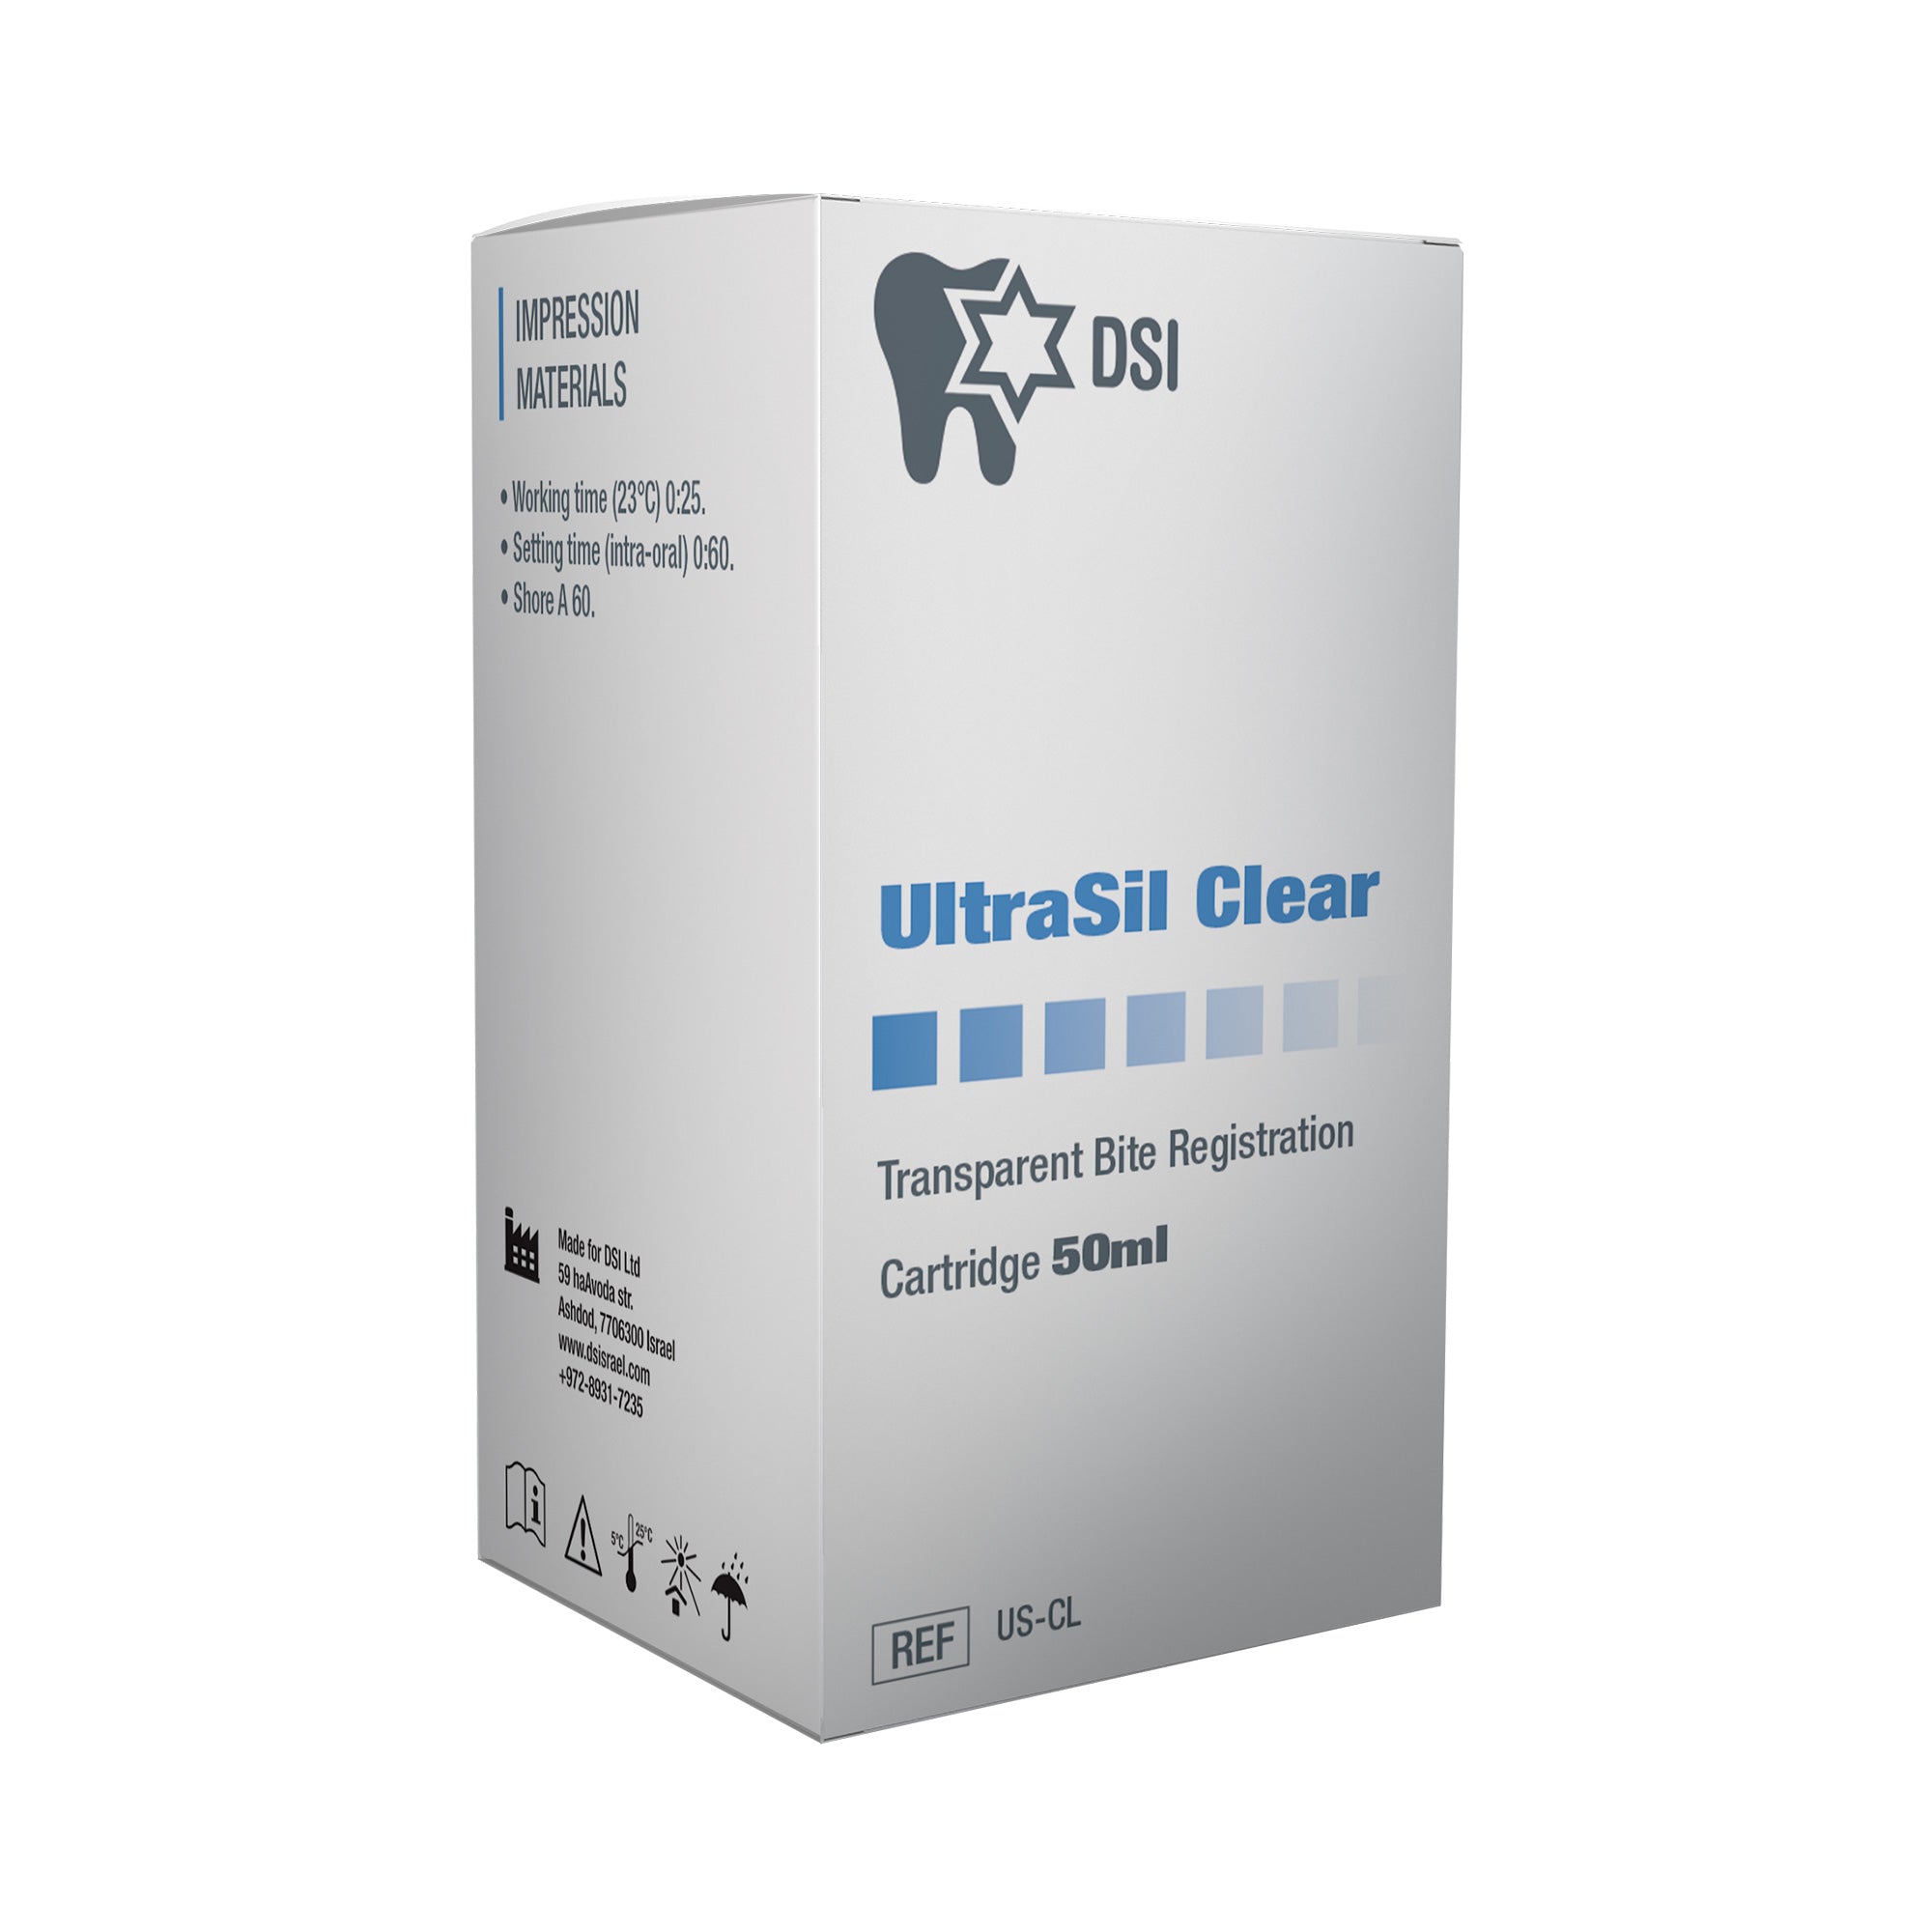 DSI Ultrasil Clear - Transparent Bite Registration Material In 50ml